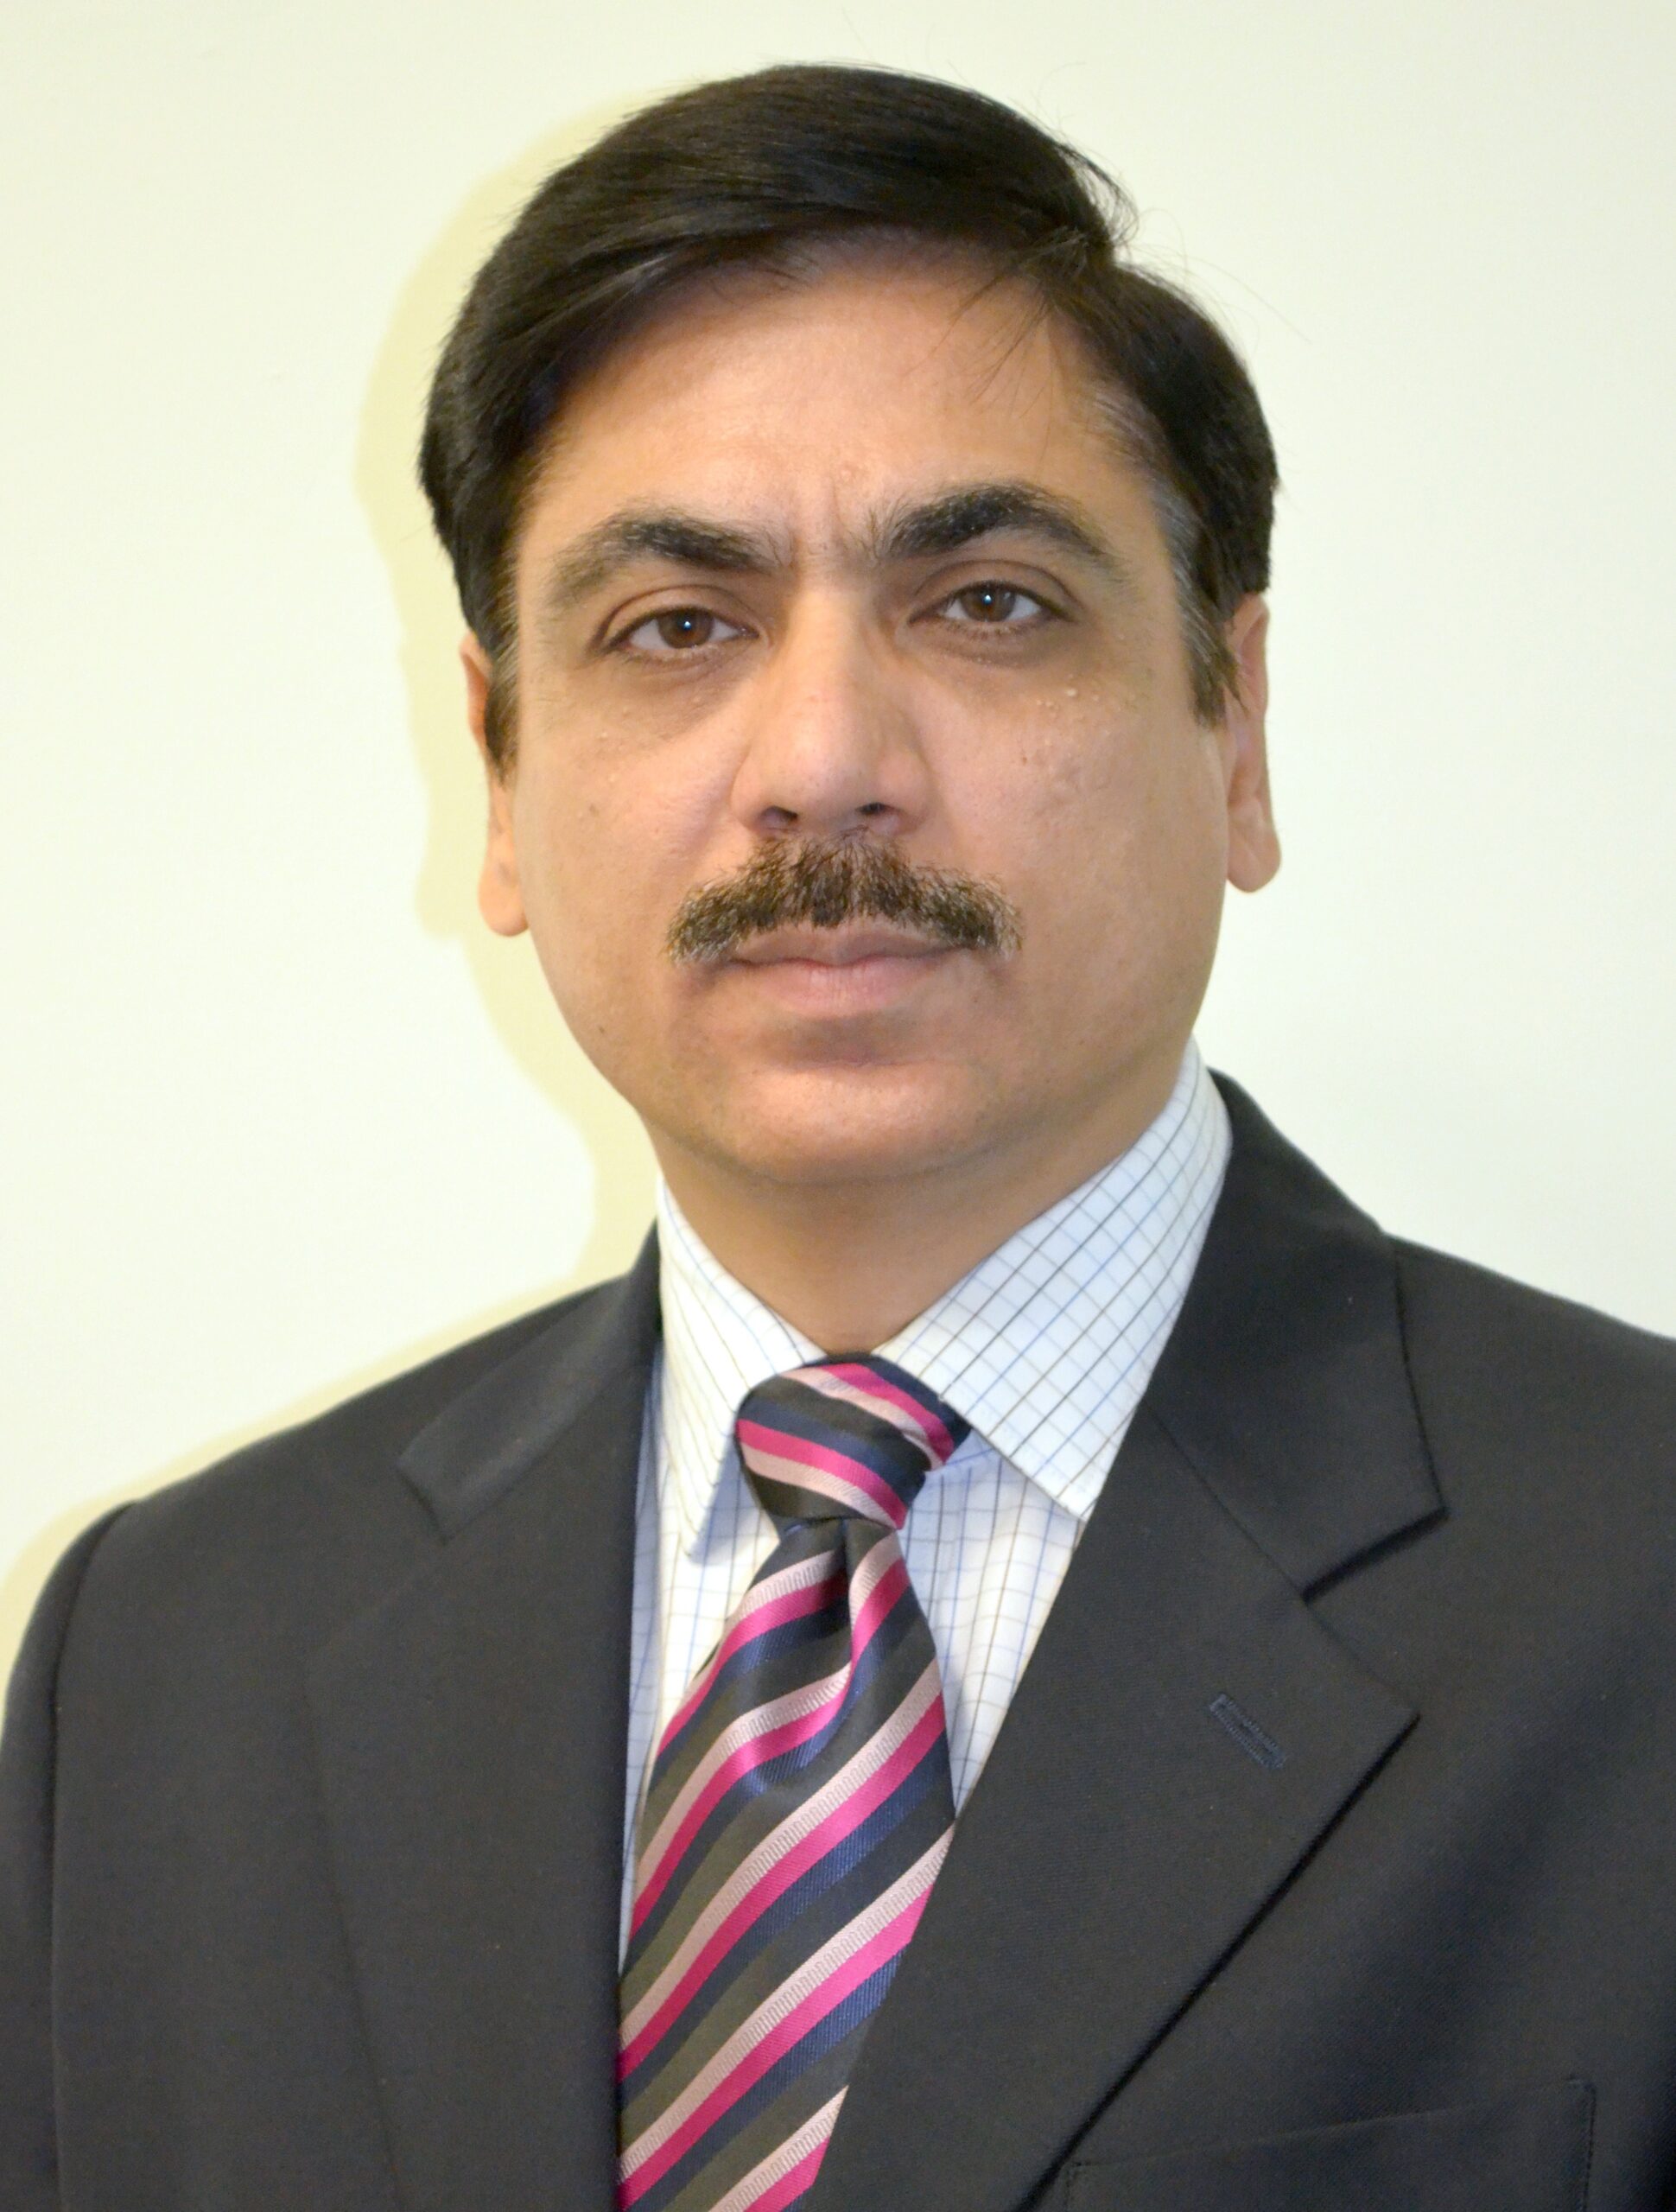 Capri Global Capital Ltd appoints Mr. Raj Kumar Ahuja as Group Chief Financial Officer